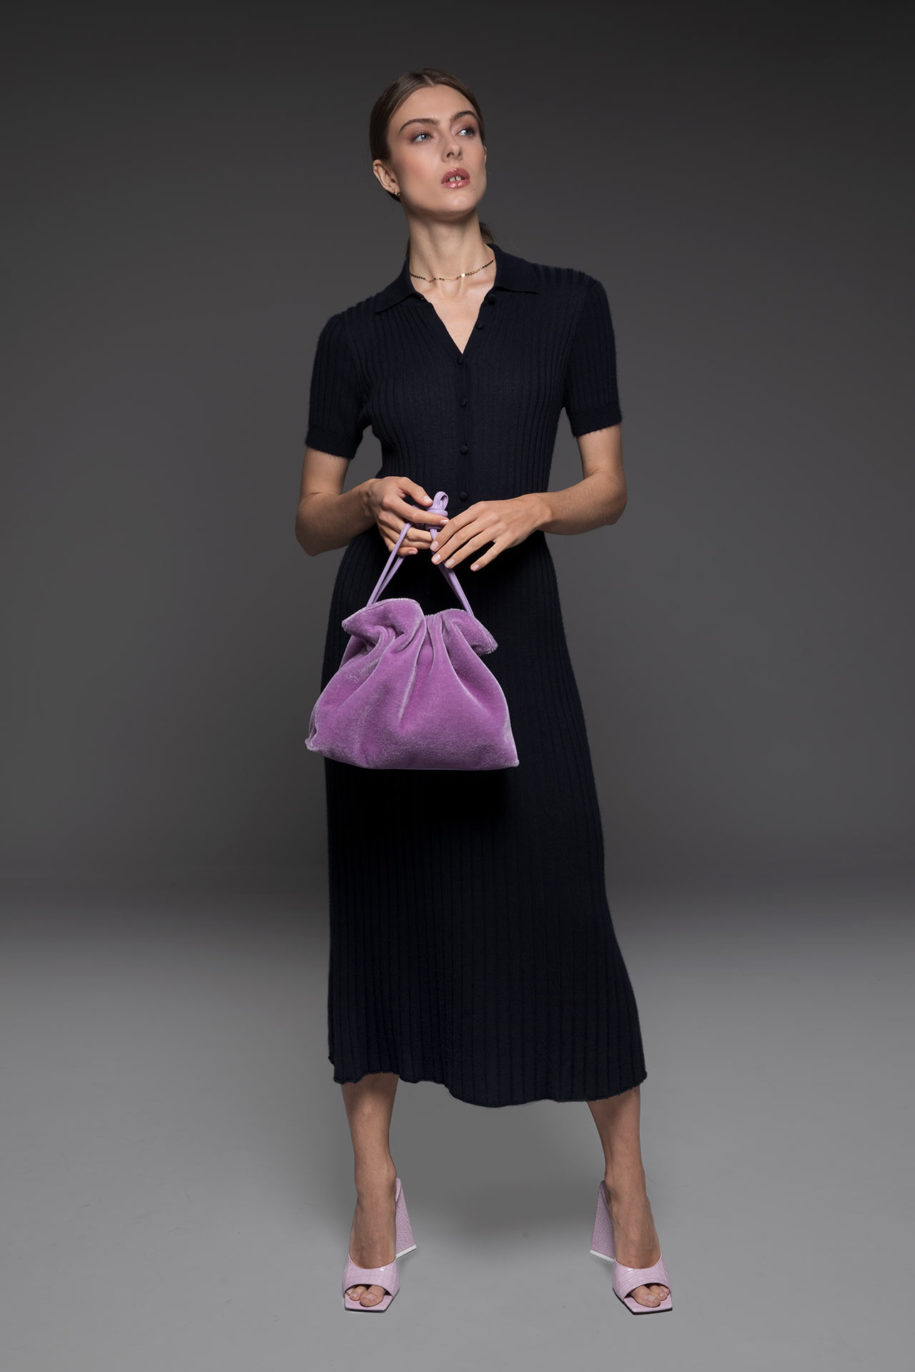 Neiman Marcus - Sweater Dress and Purple Velvet Bag